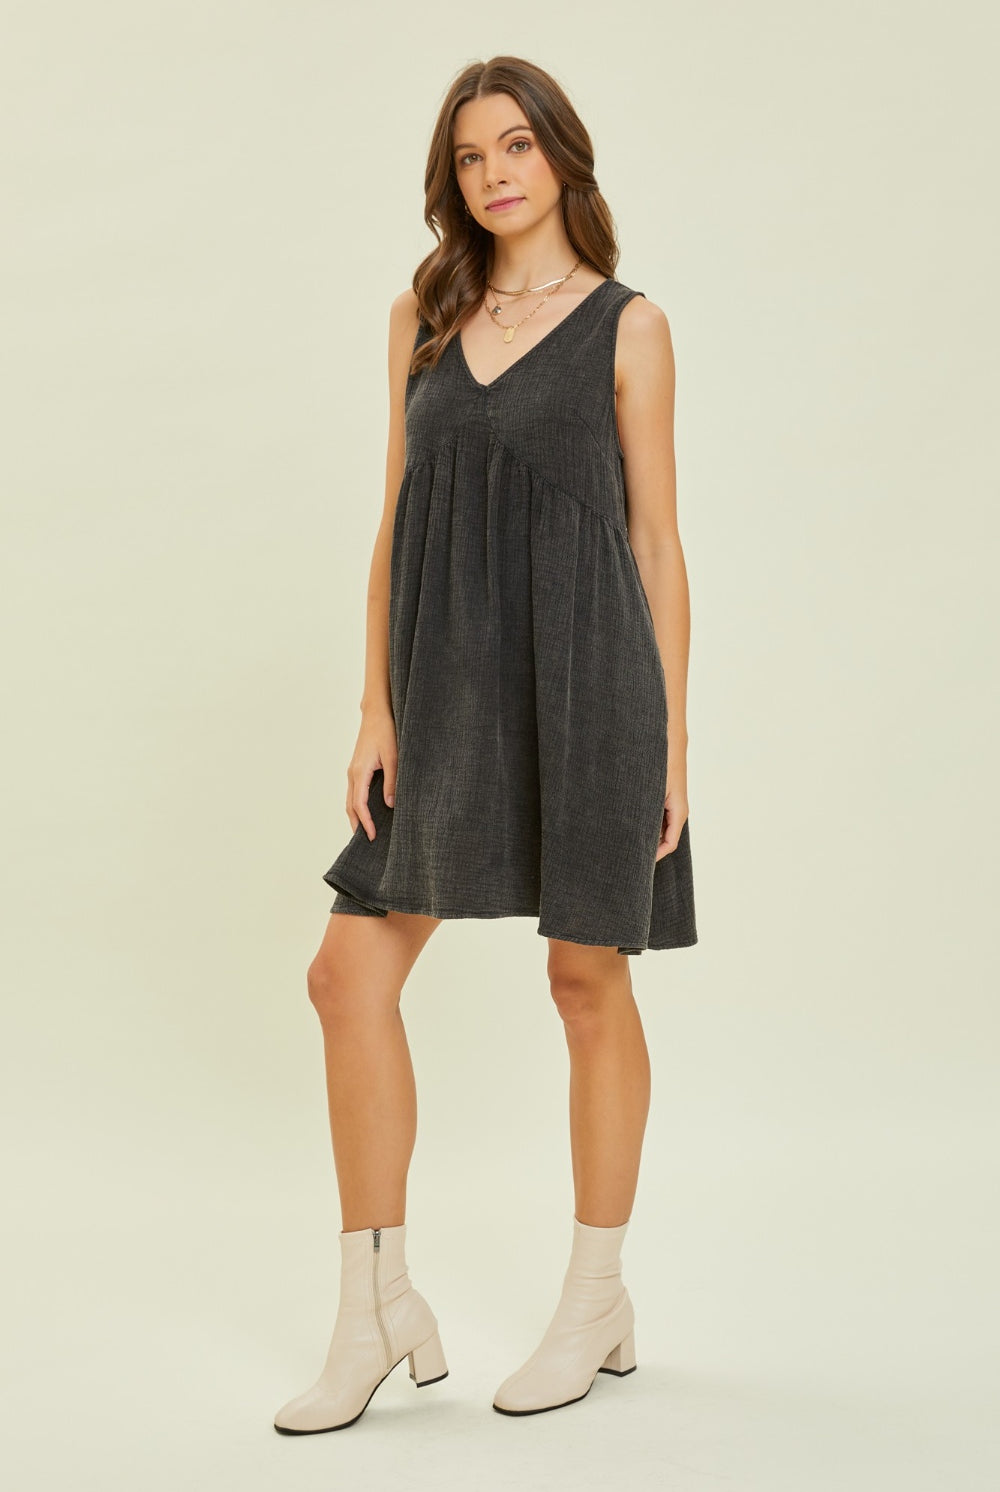 HEYSON Full Size Texture V-Neck Sleeveless Flare Mini Dress-Krush Kandy, Women's Online Fashion Boutique Located in Phoenix, Arizona (Scottsdale Area)